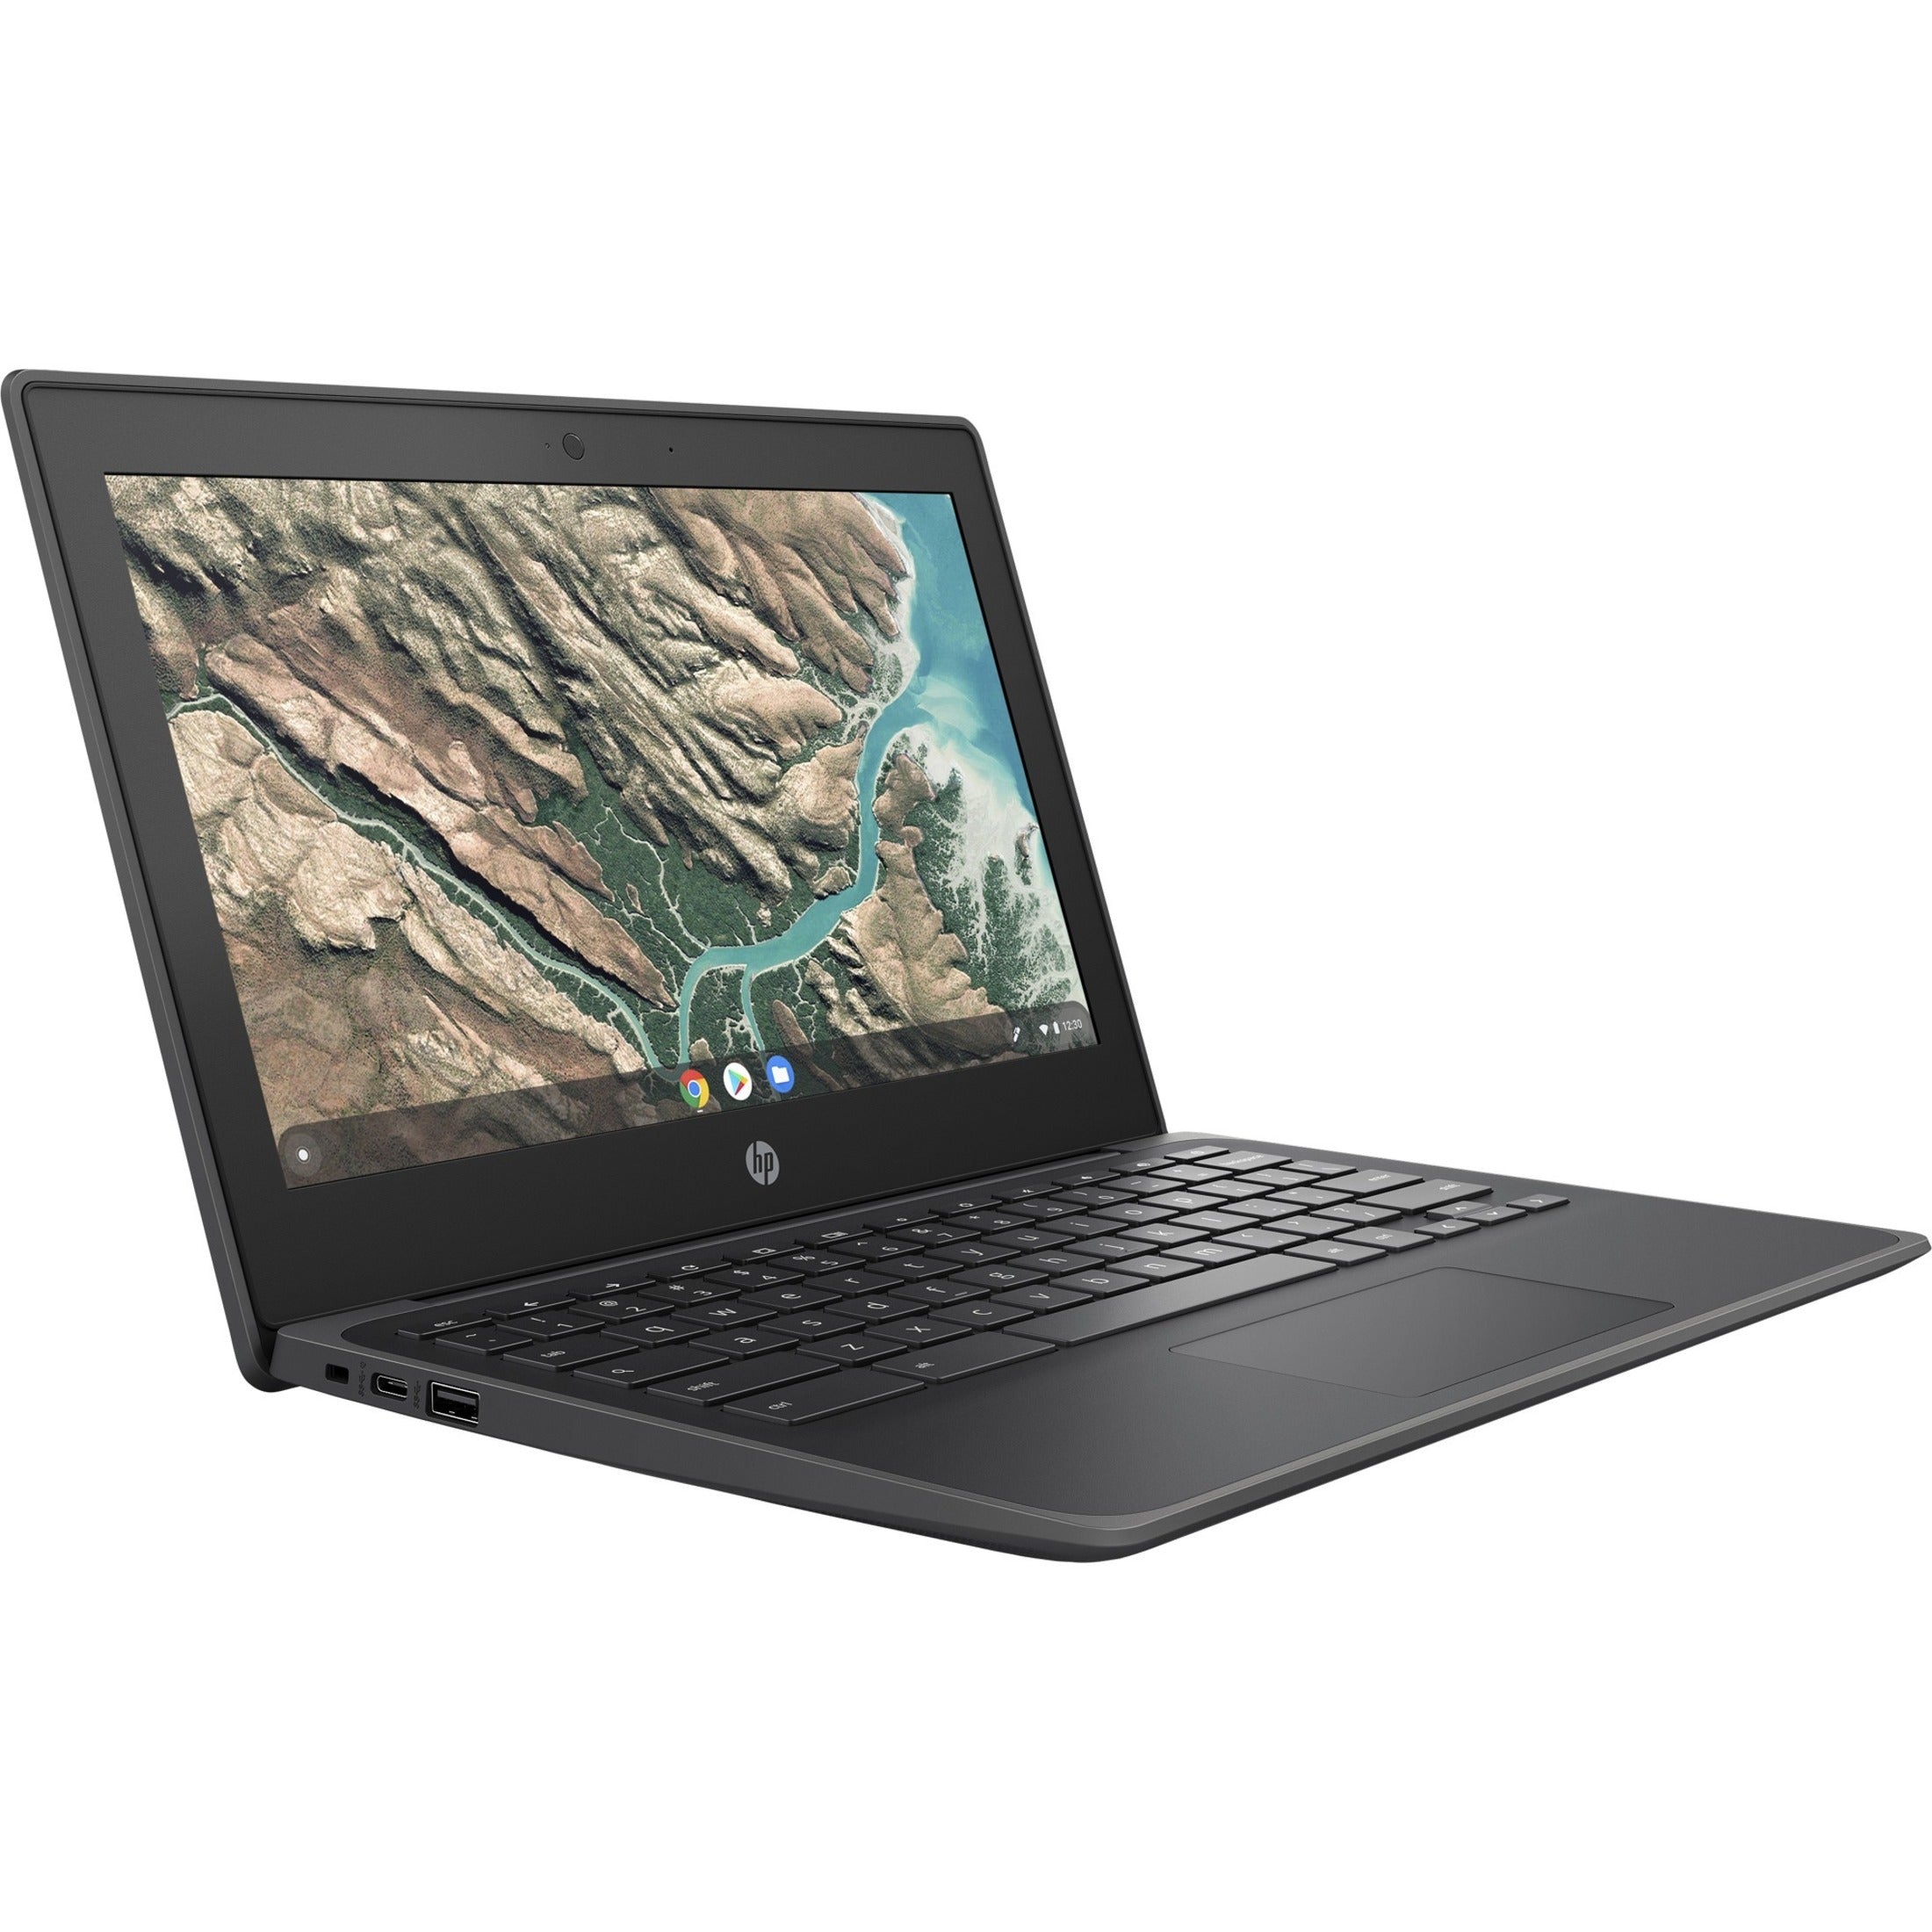 HPI SOURCING - NEW Chromebook 11 G8 EE Education Edition, 11.6 HD, Intel Celeron N4020, 4GB RAM, 32GB Flash Memory